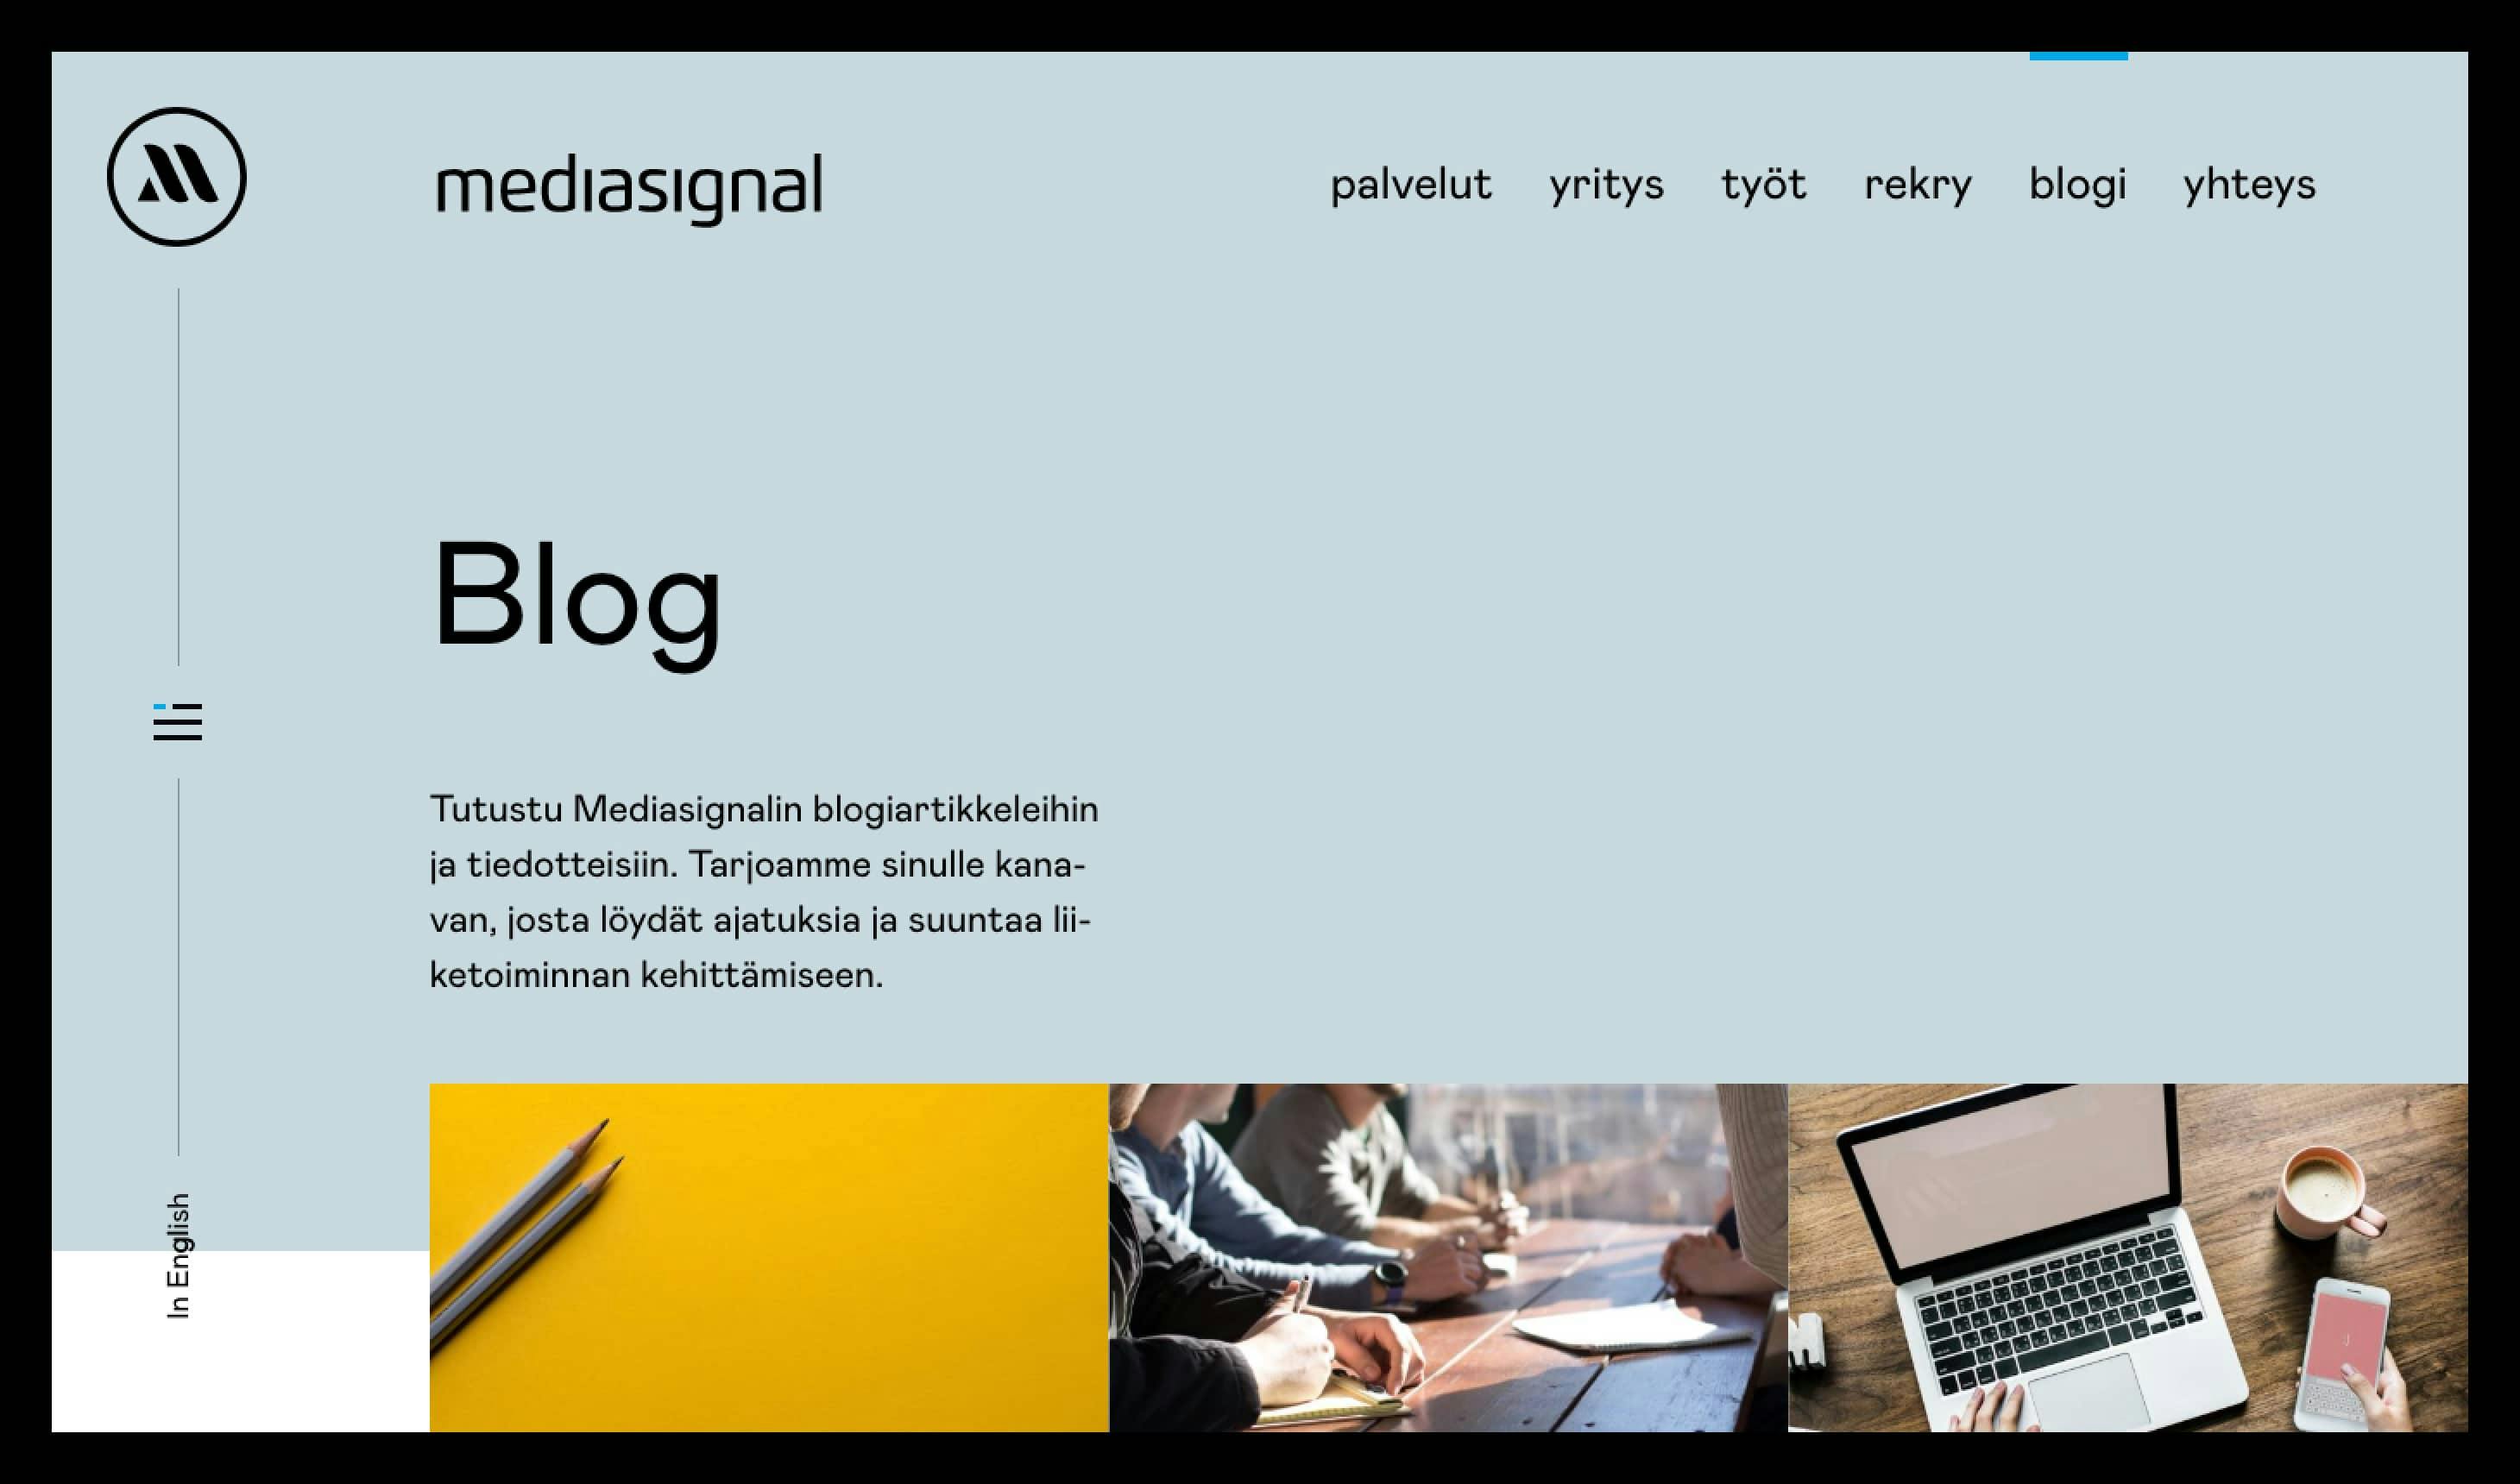 Mediasignal blog page